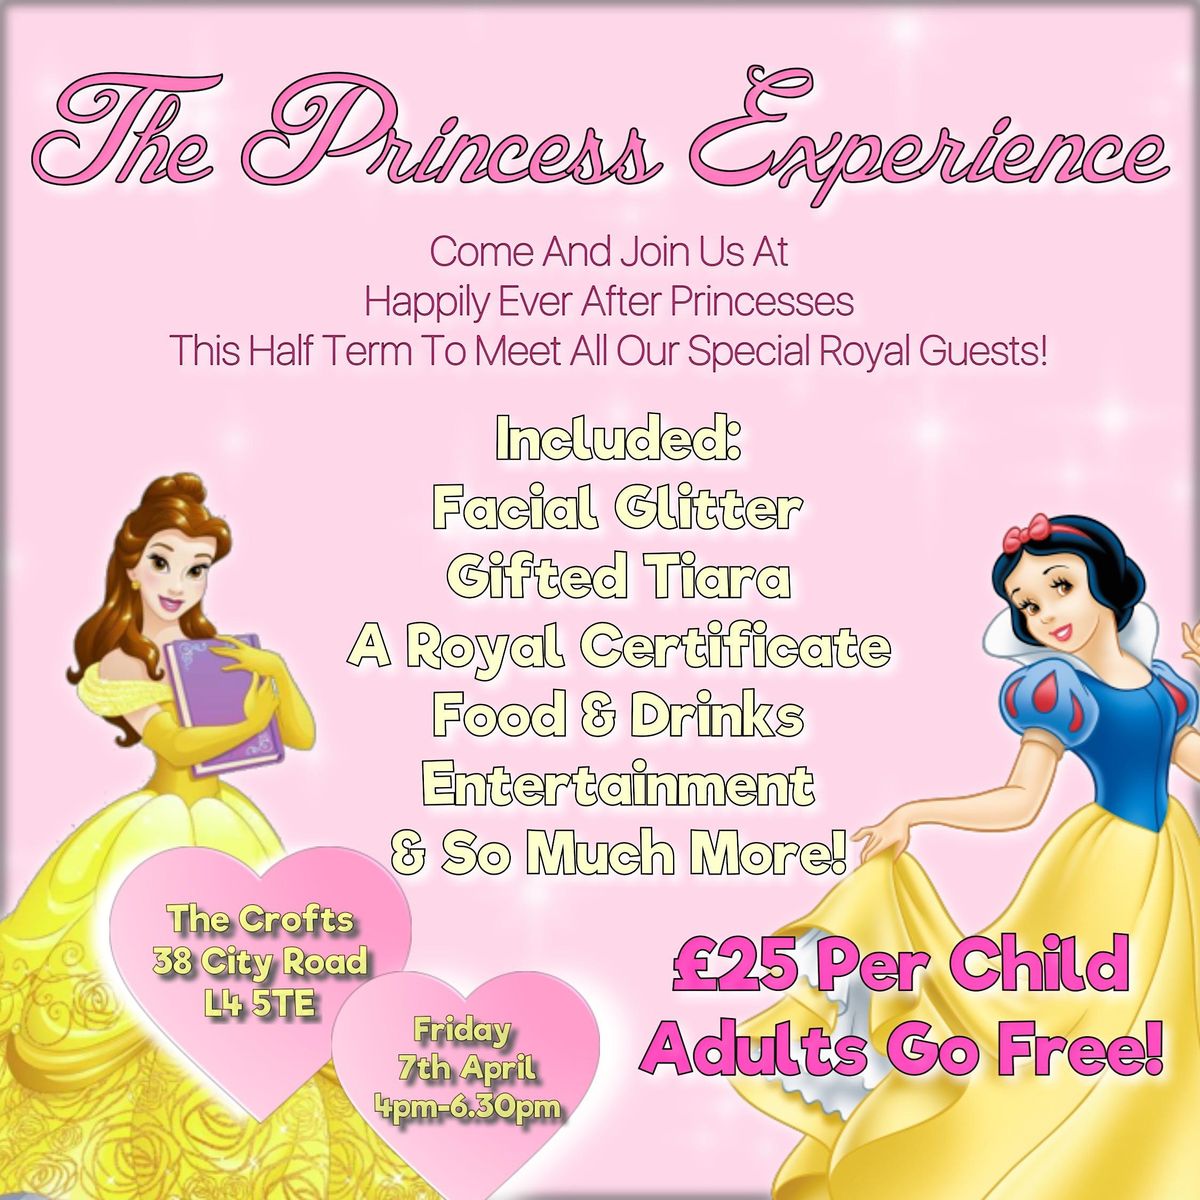 The Princess Experience